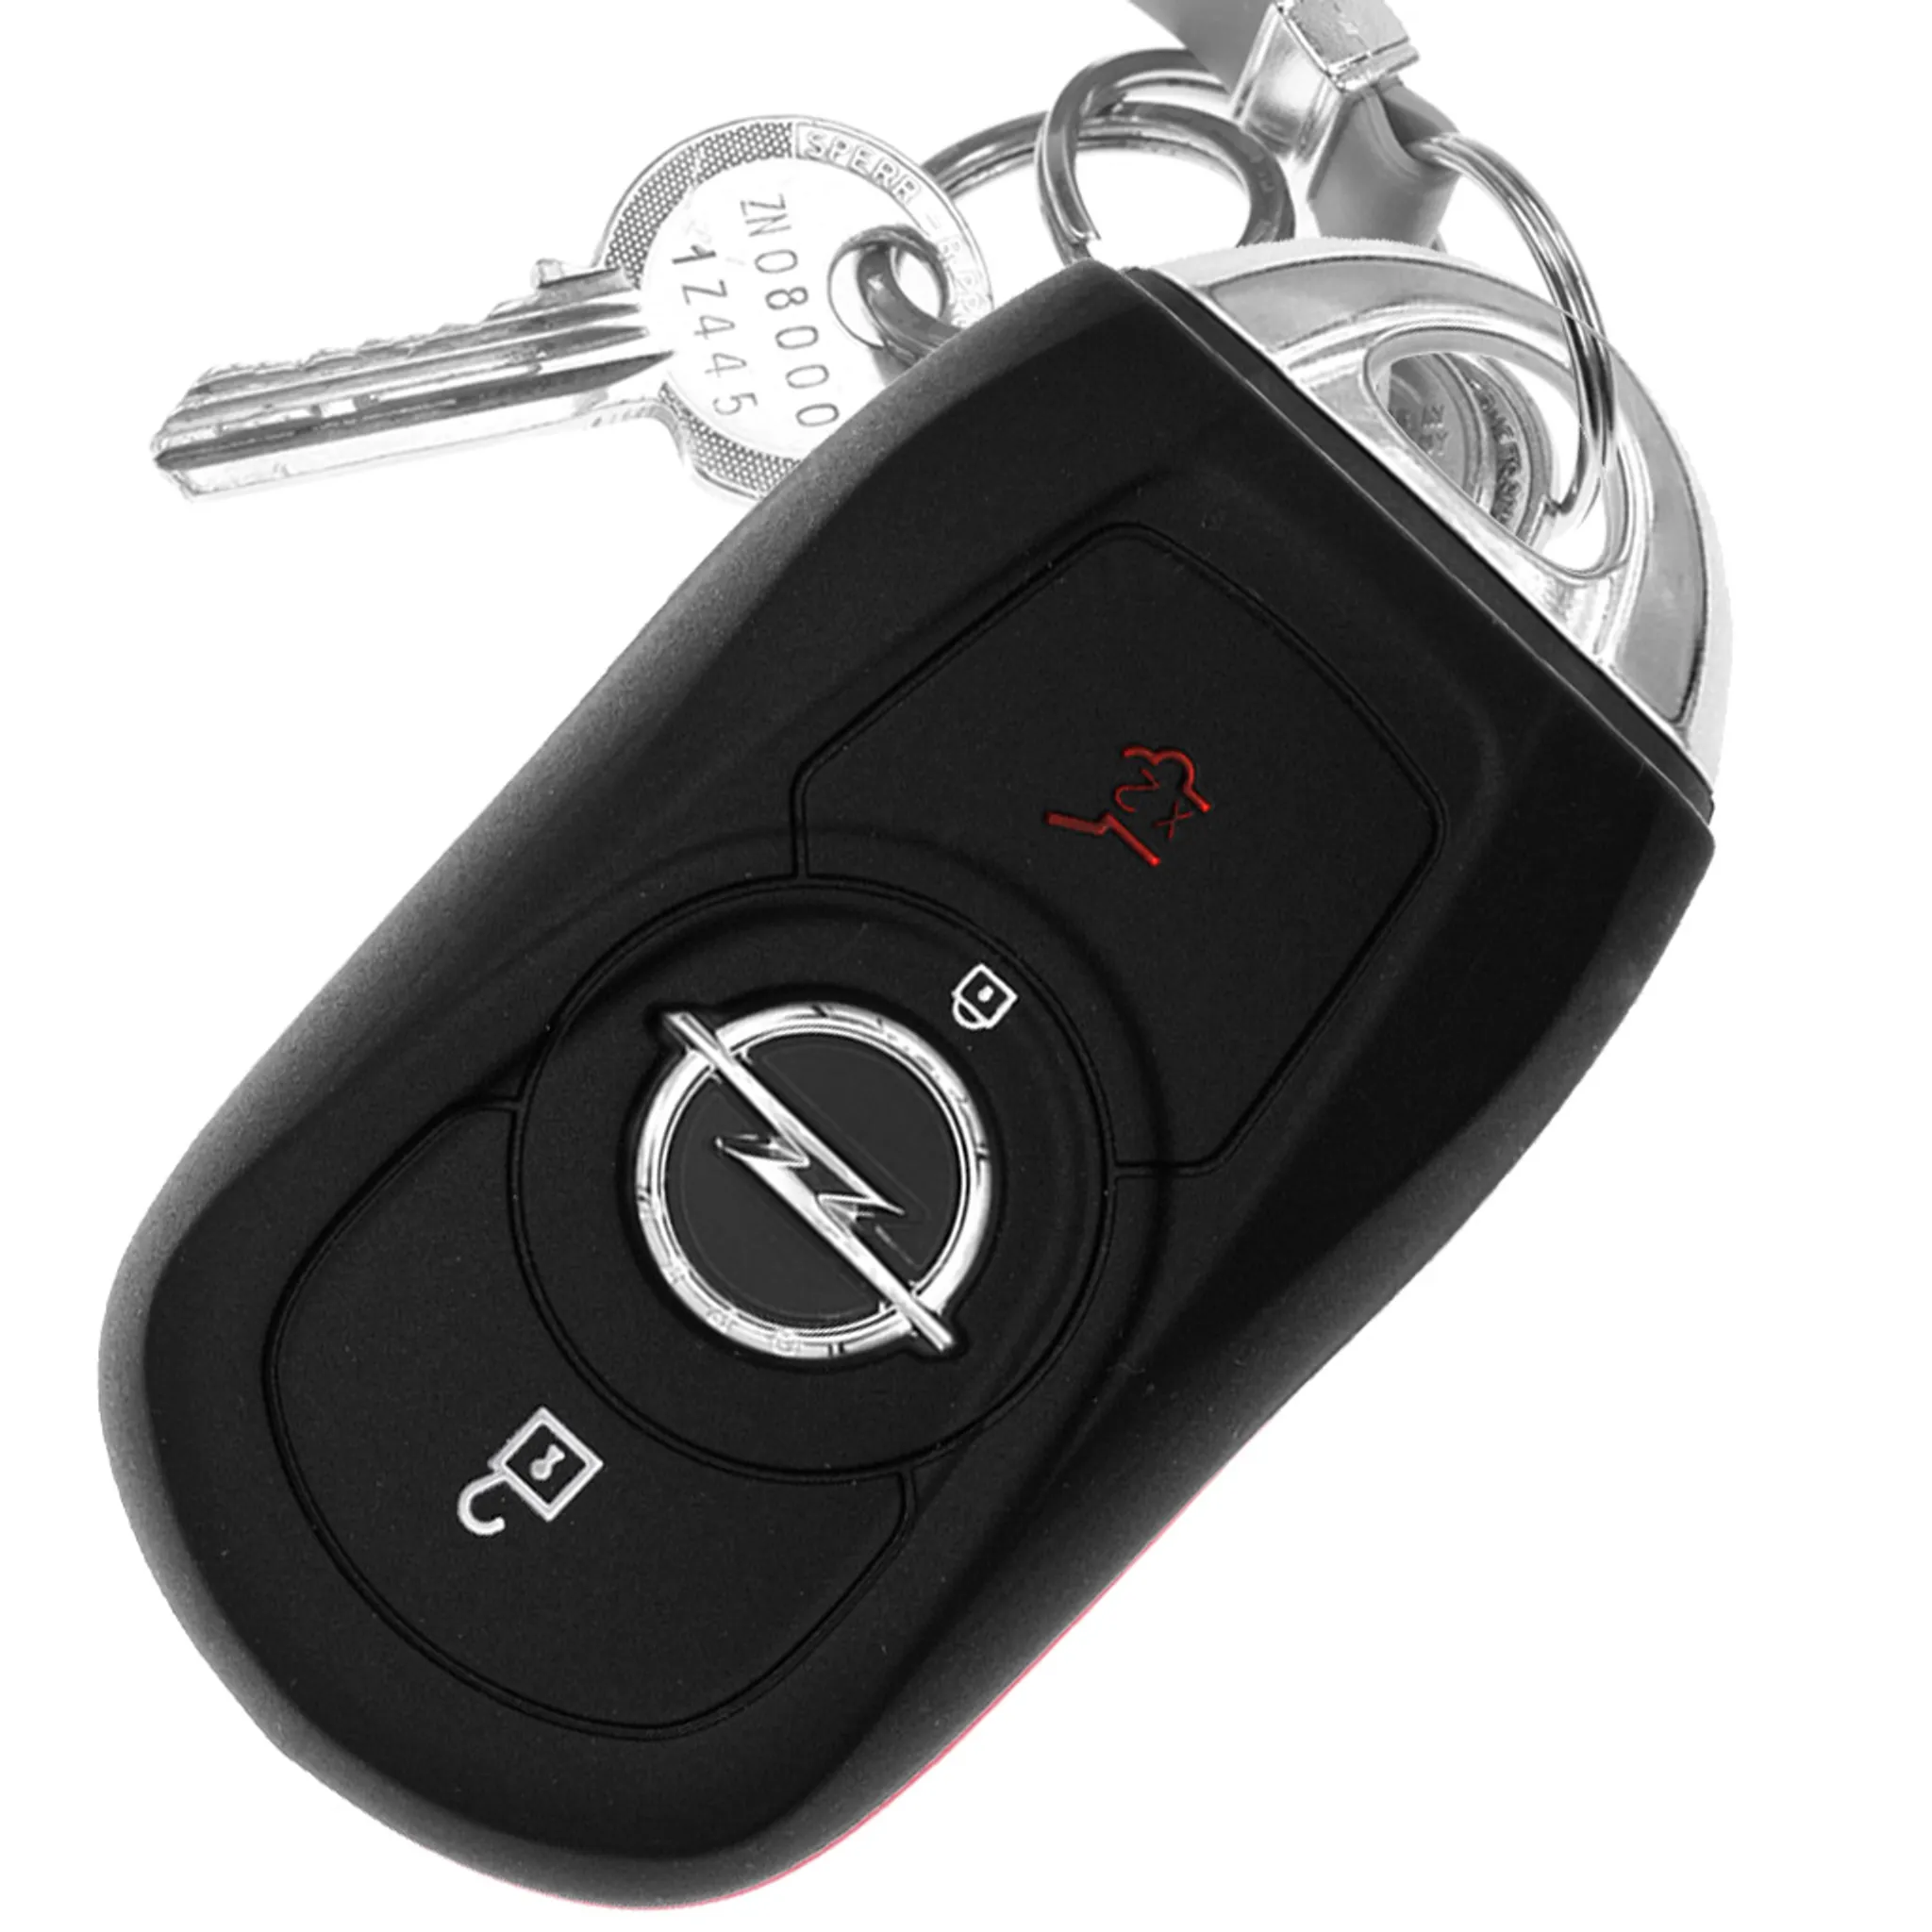 Schlüssel Hülle Cover Silikon passend für AUDI Schlüssel Typ-B7, 7,65